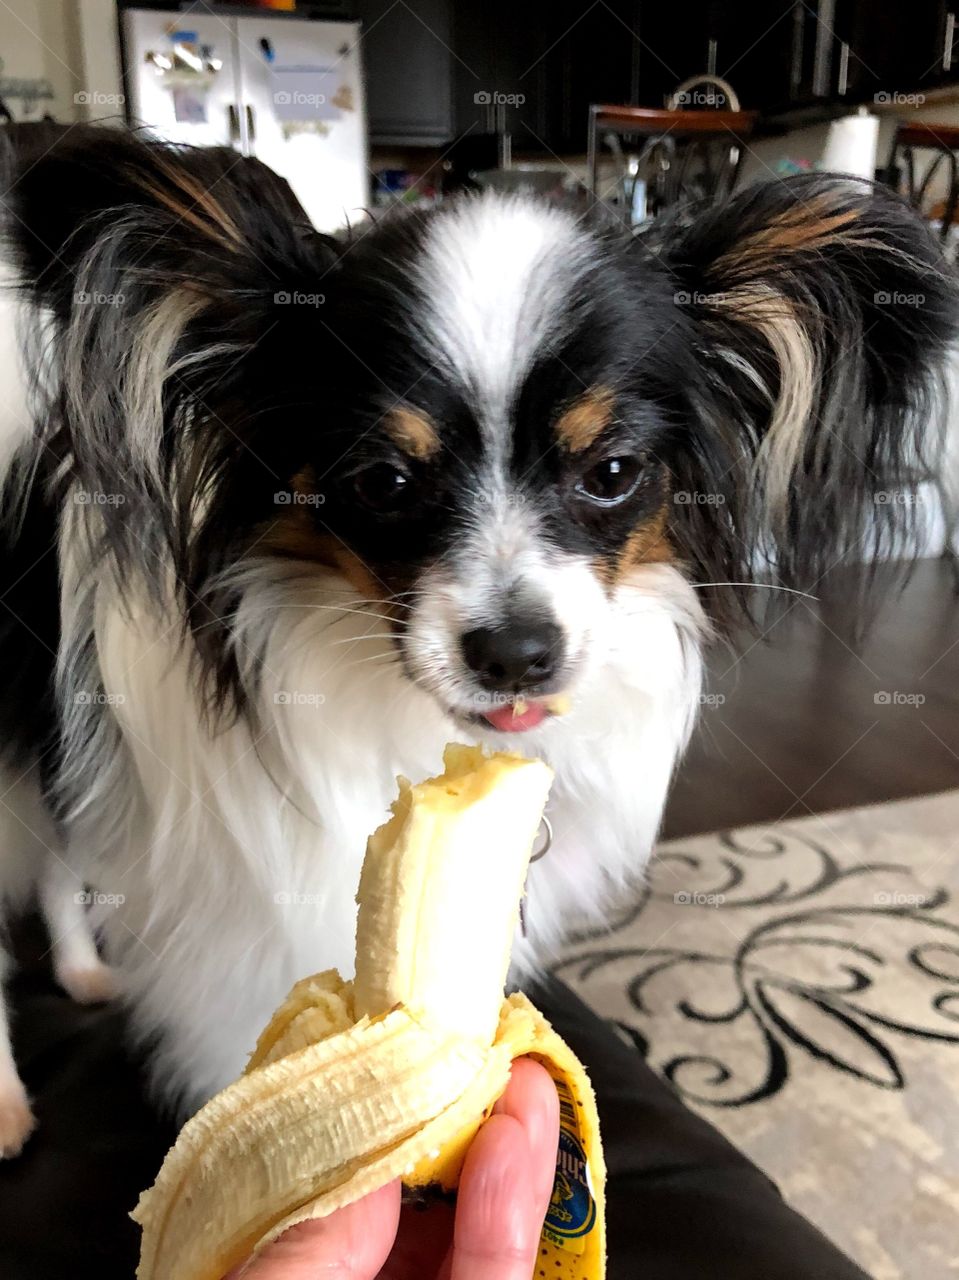 My Banana